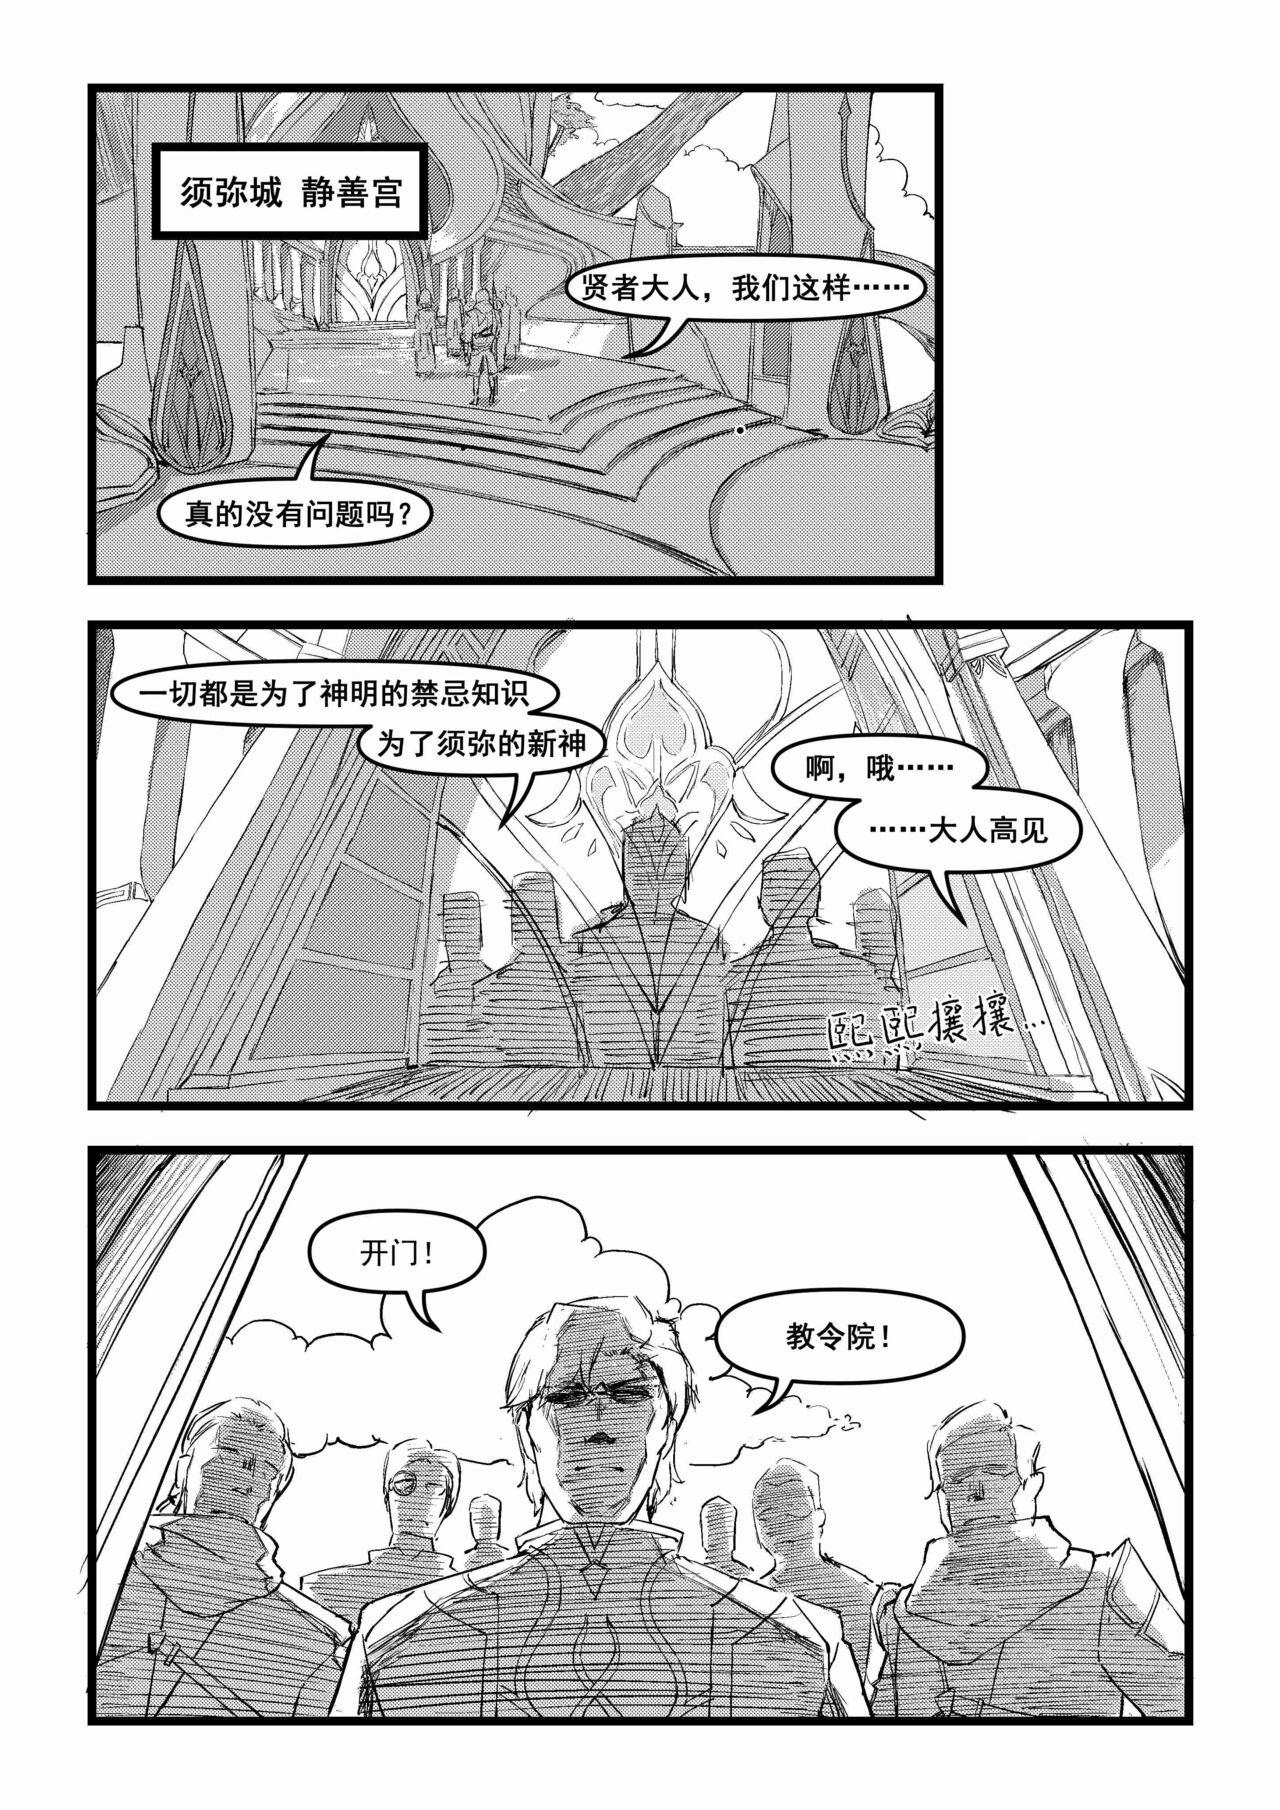 Amature 开门! 教令院! - Genshin impact  - Page 3